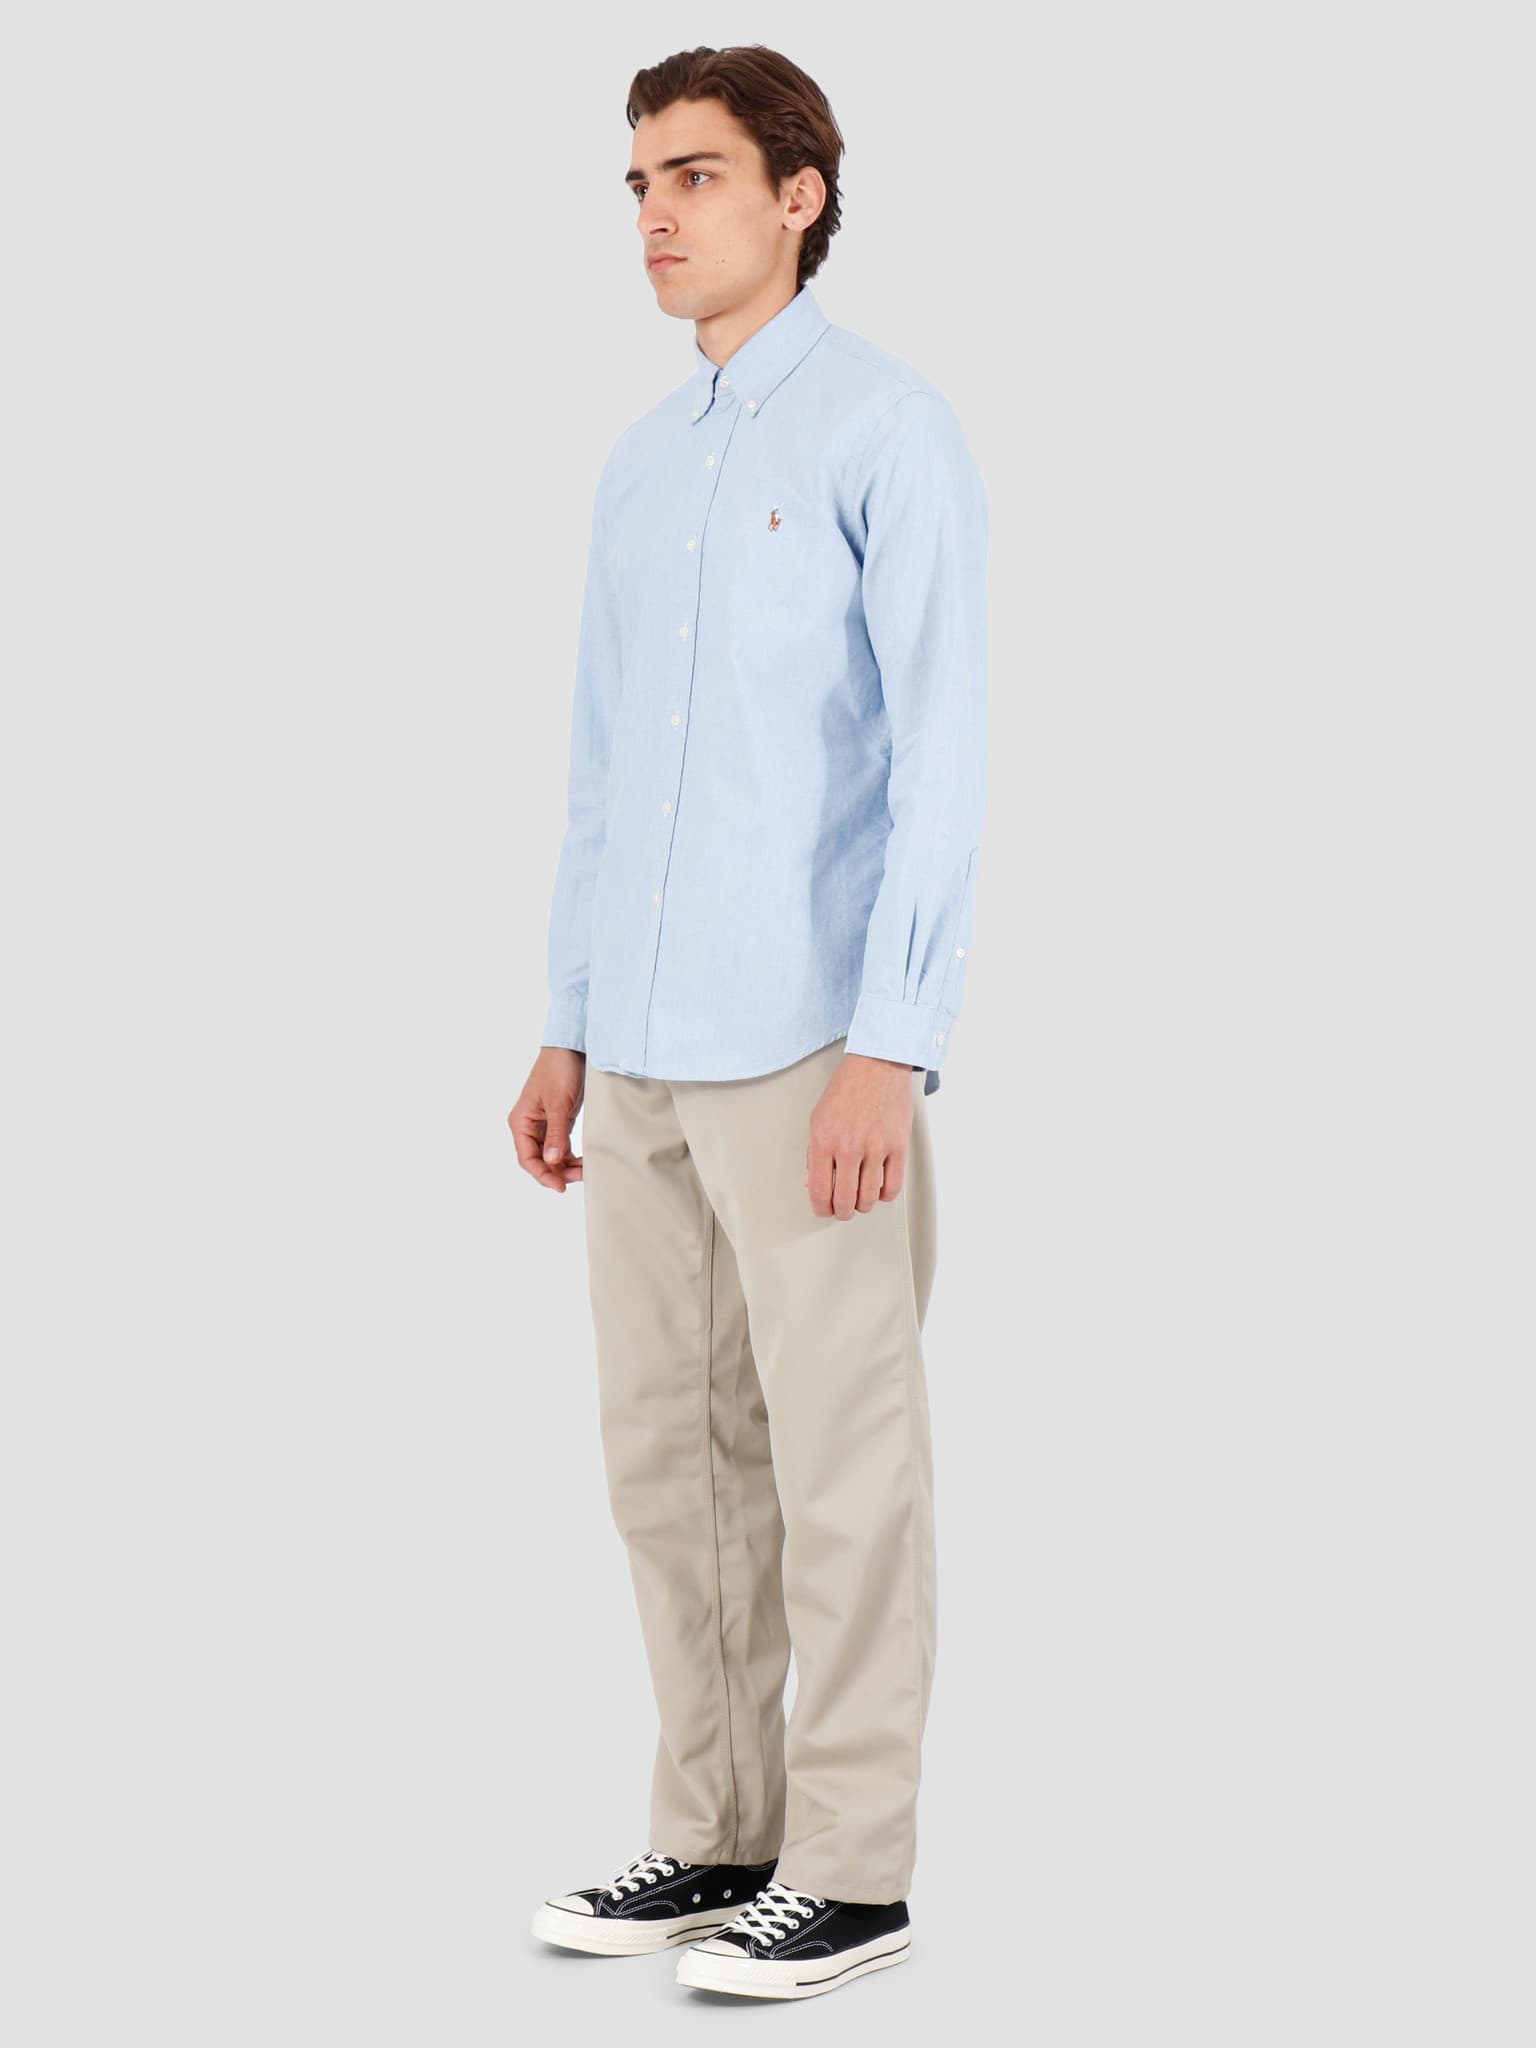 Polo Ralph Lauren Classic Fit Oxford Short Sleeve Shirt Mens 3XB Blue  Cotton - Helia Beer Co